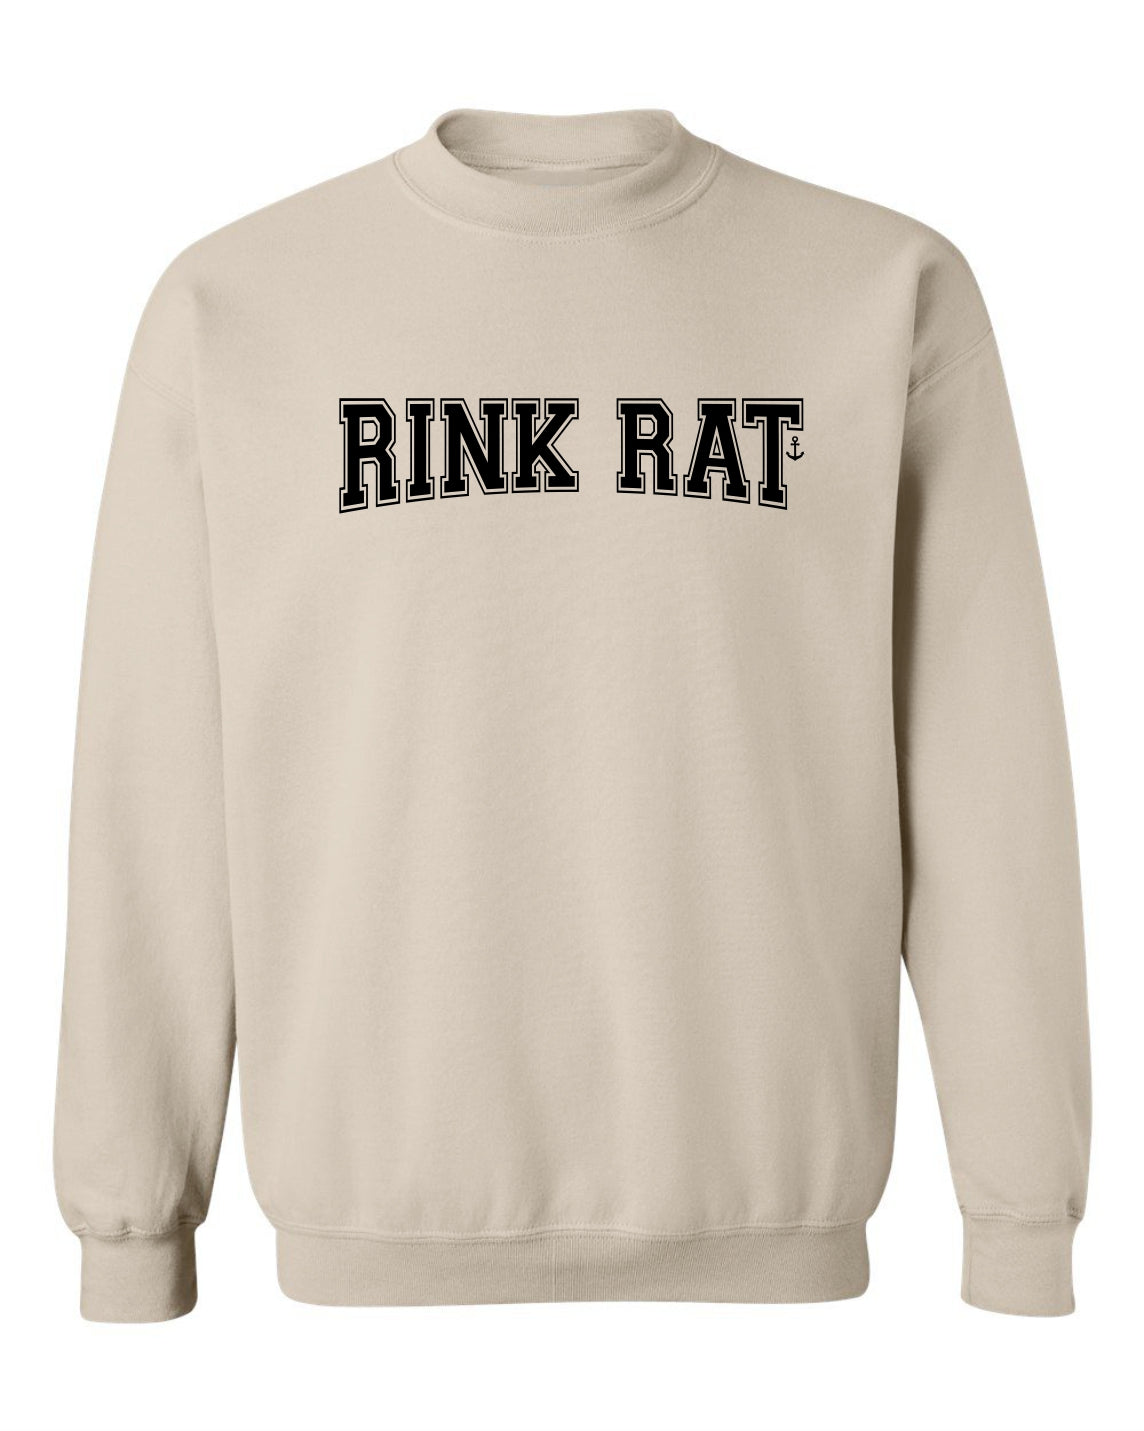 "Rink Rat” Unisex Crewneck Sweatshirt